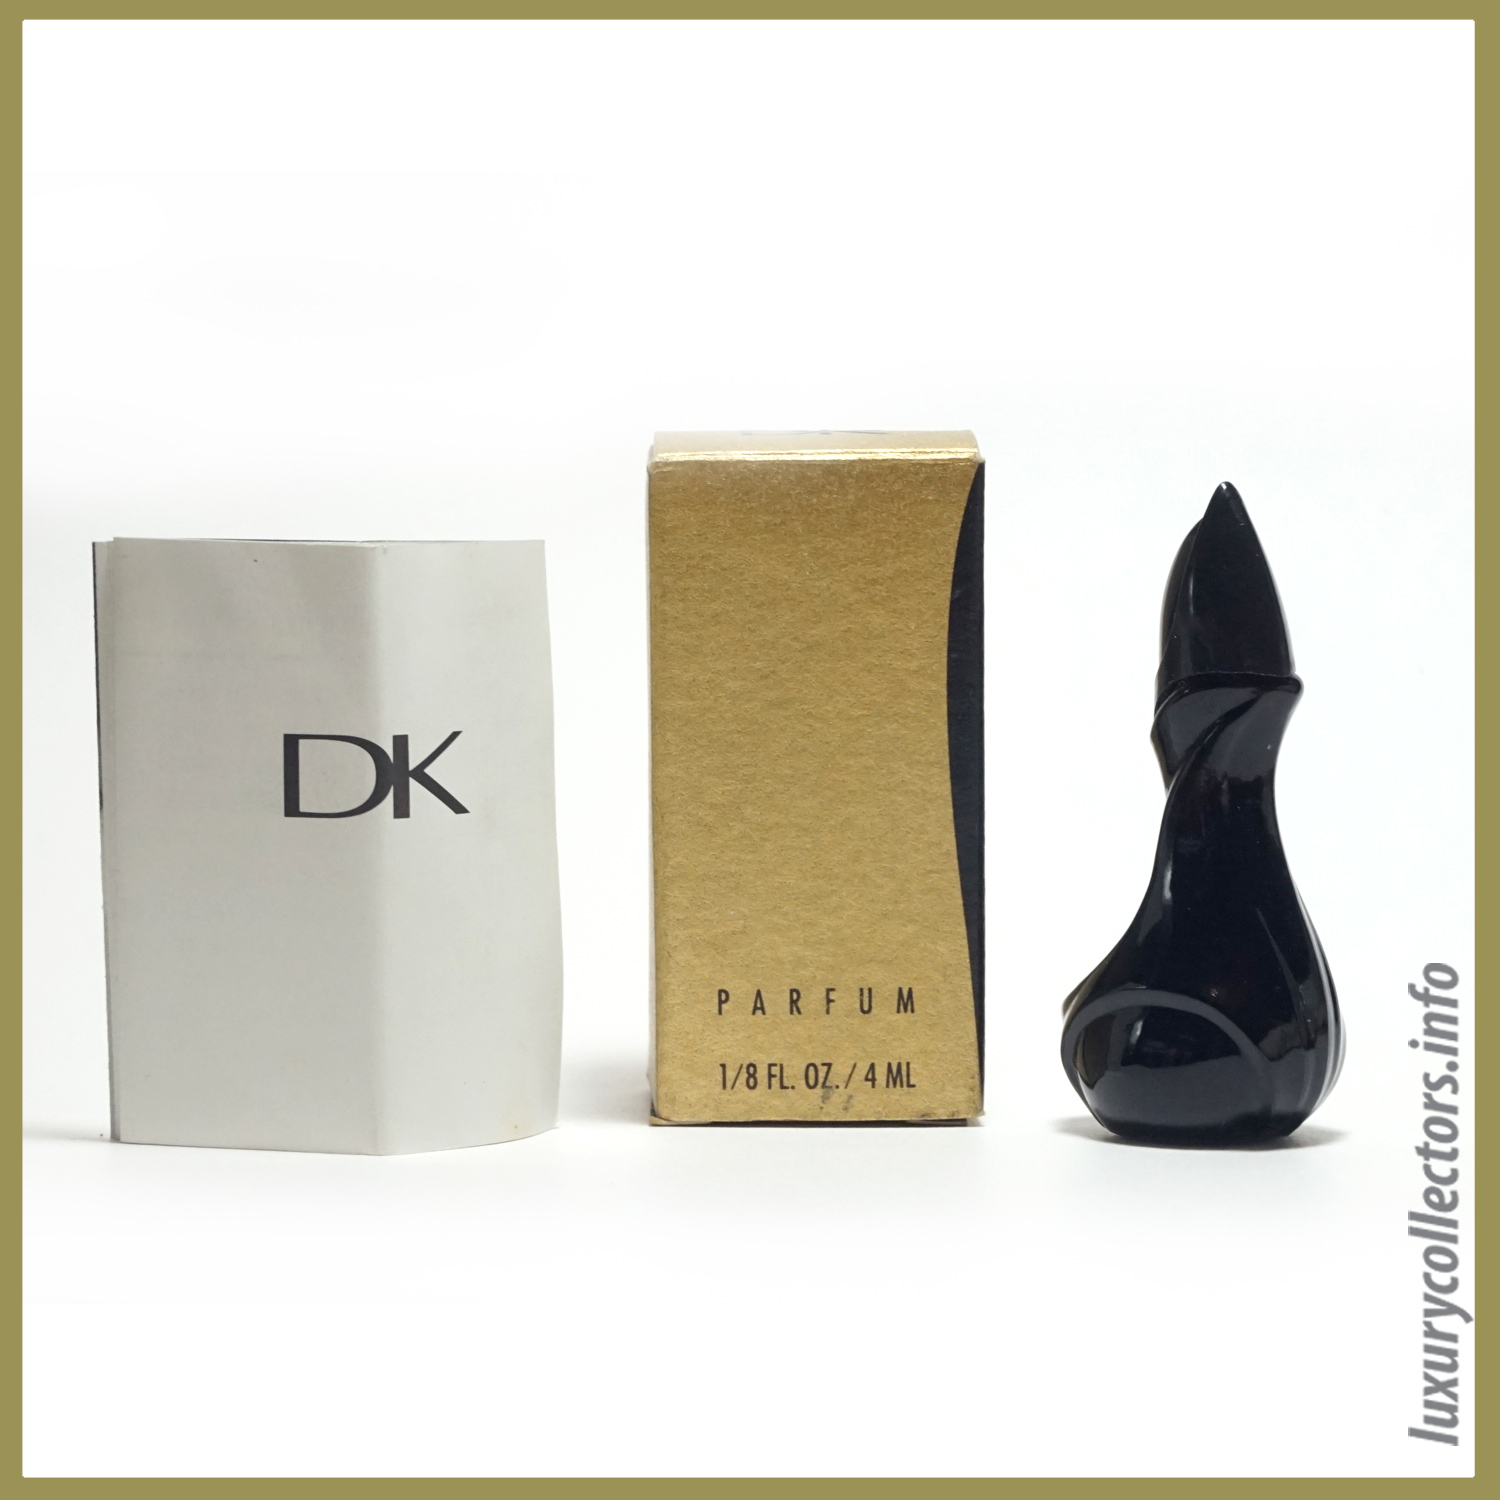 Mini Miniature Donna Karan New York Parfum Limited Edition Perfume Bottle Black box papers certificate